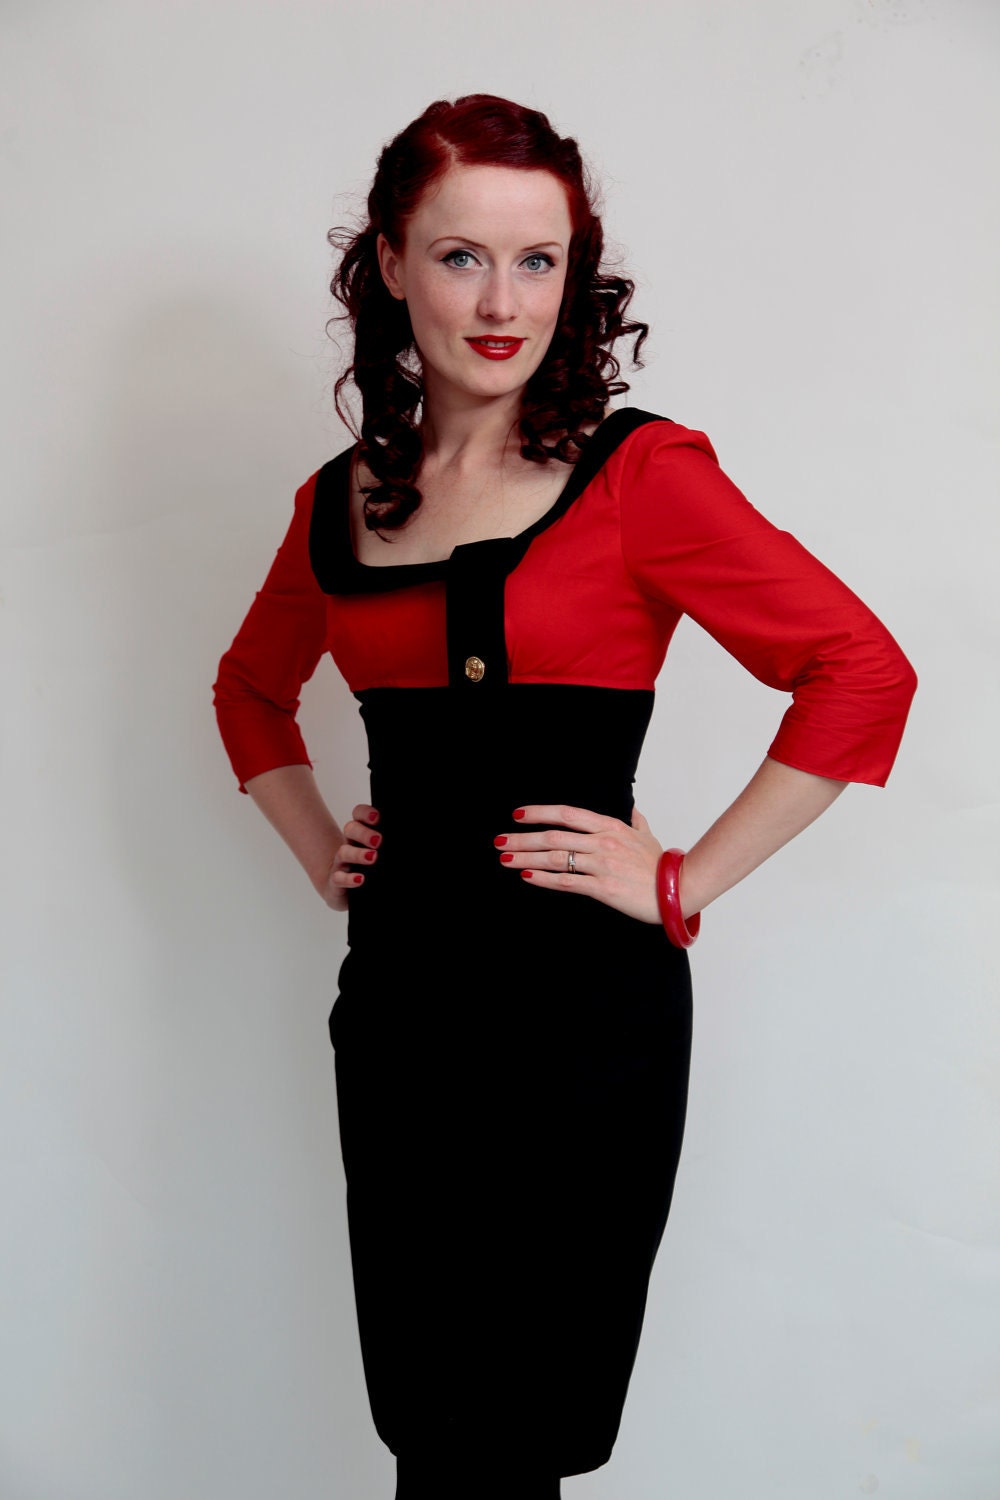 1950s inspired bombshell dress in black navy red and white